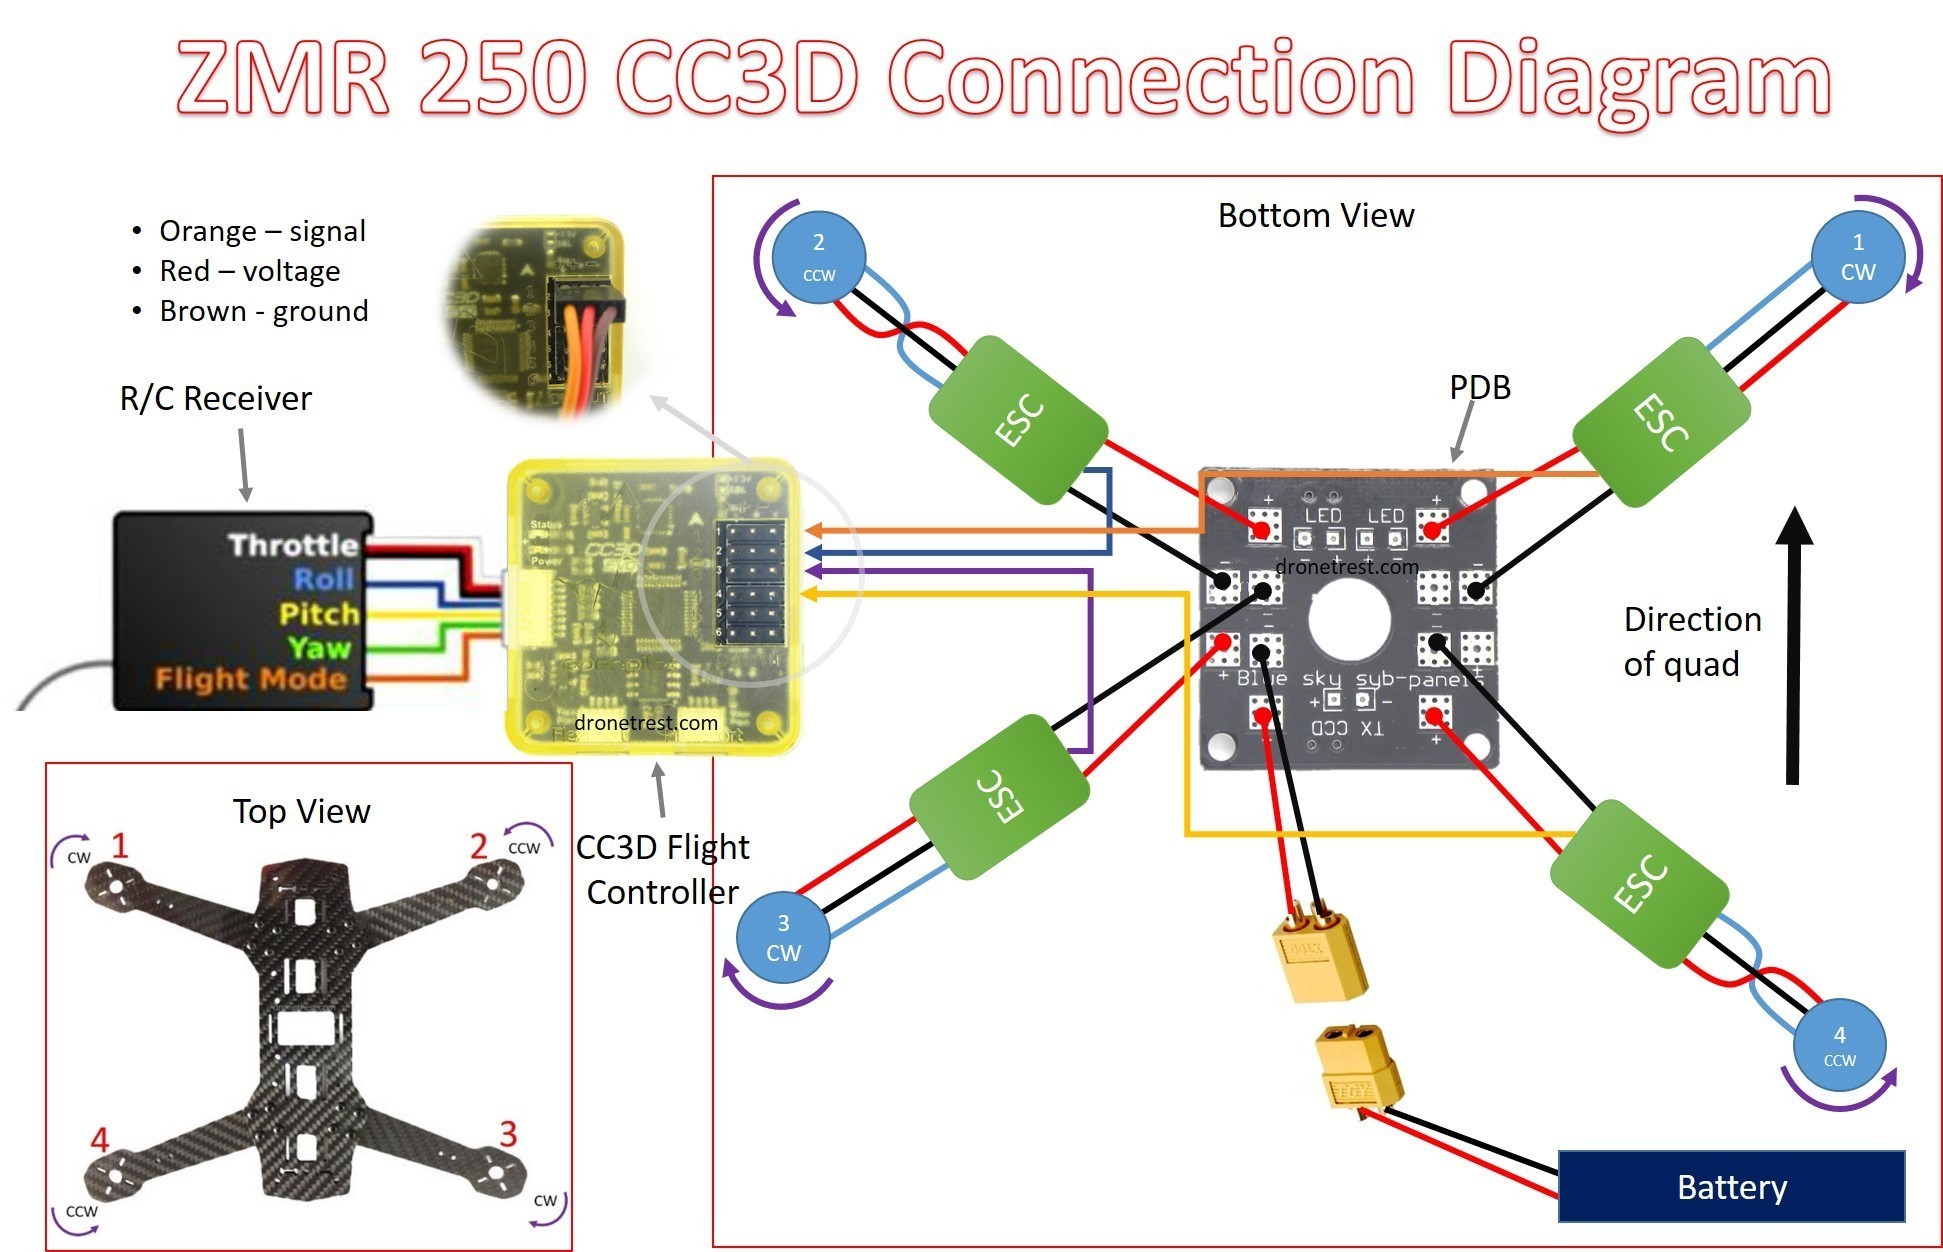 cc3d wiring diagrams schematics wiring diagrams u2022 rh seniorlivinguniversity co CC3D Flight Controller Manual Mini CC3D